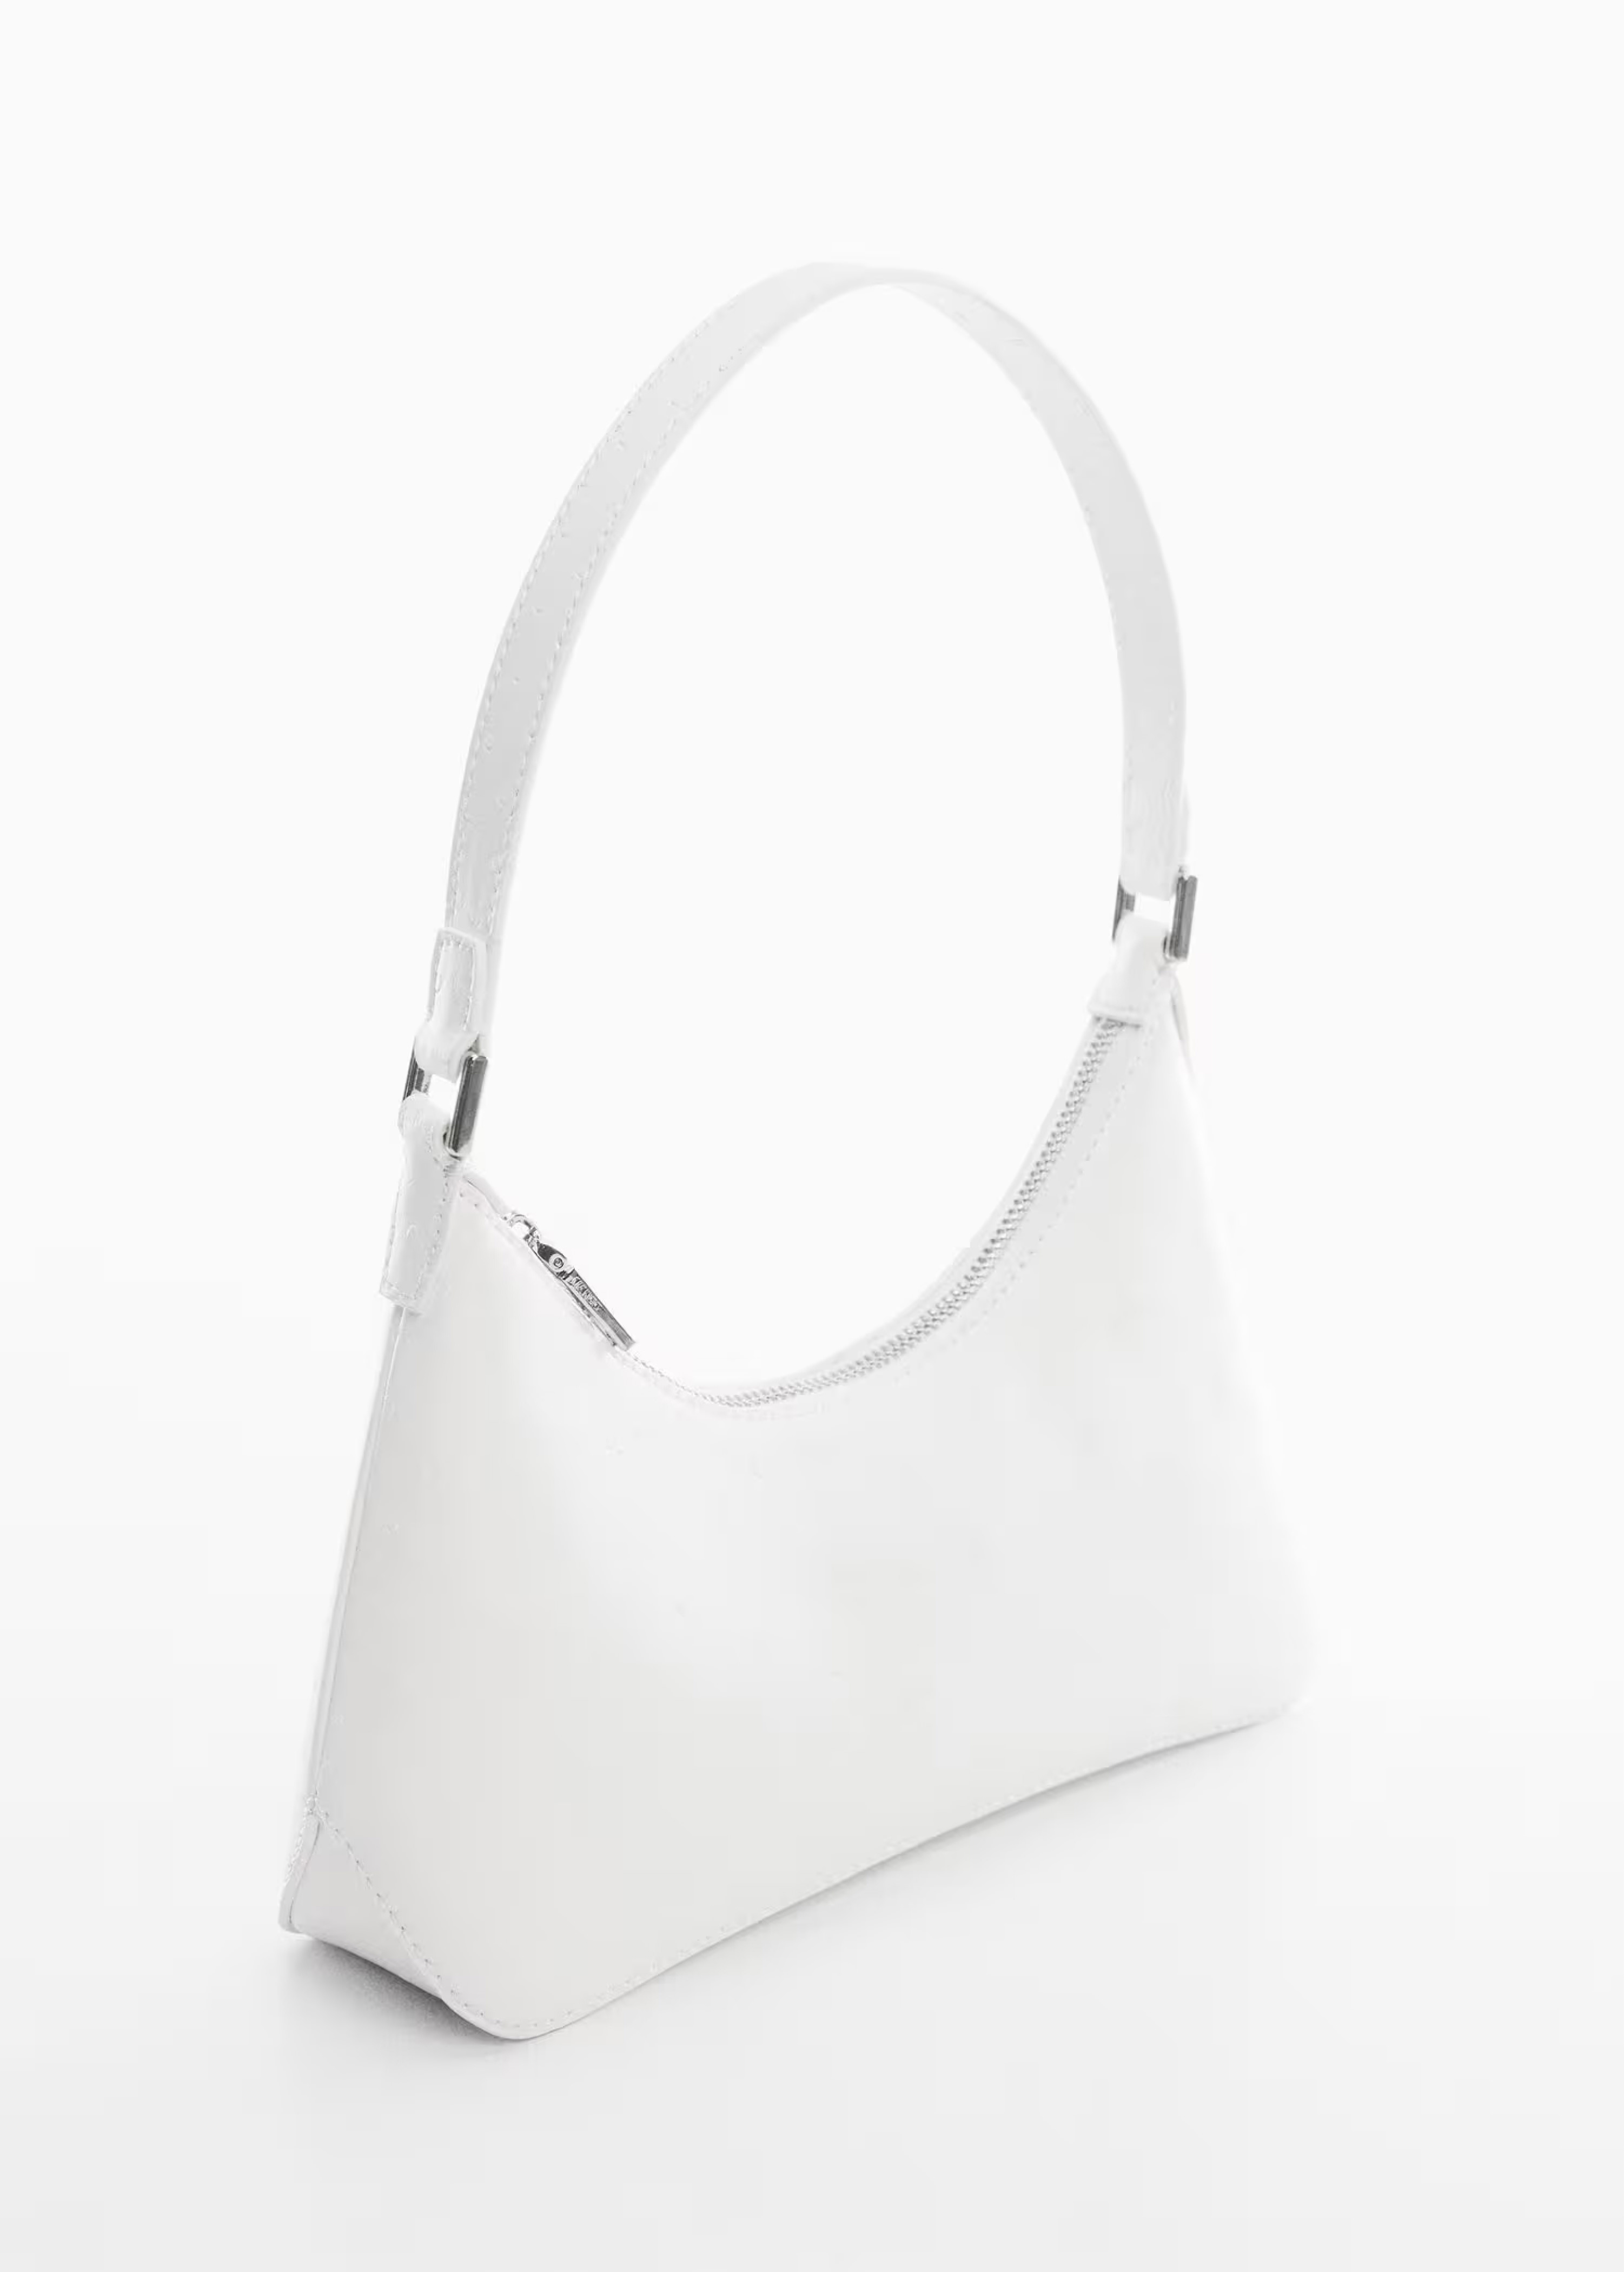 Un bolso blanco de estilo minimalista